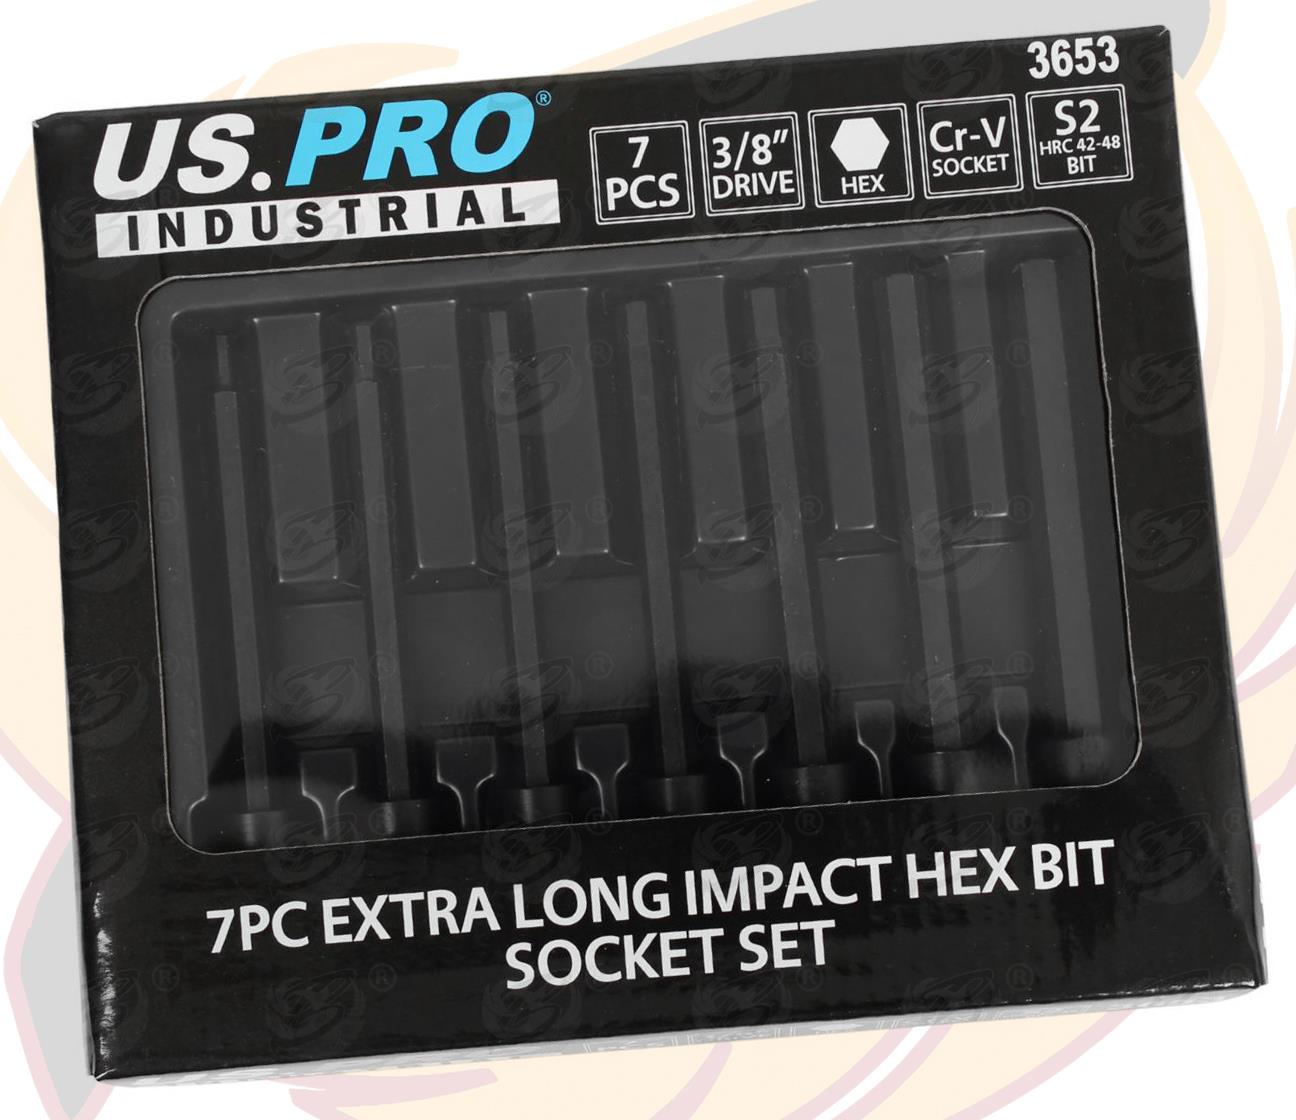 US PRO INDUSTRIAL 7PCS 3/8" DRIVE EXTRA LONG IMPACT HEX BIT SOCKETS H3 - H10